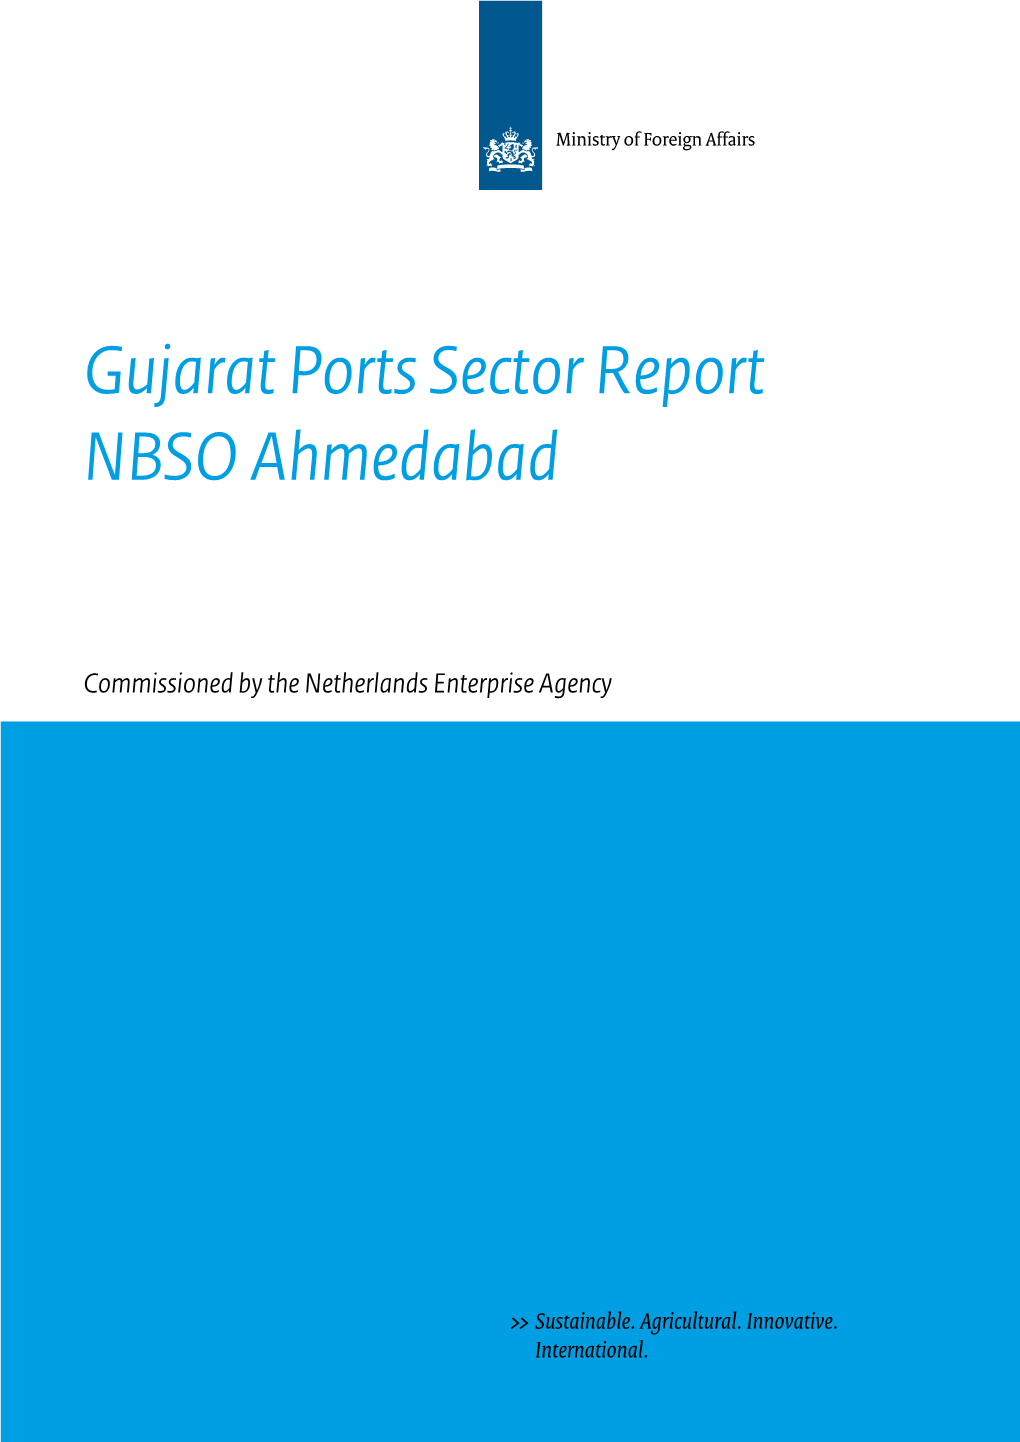 Gujarat Ports Sector Report NBSO Ahmedabad